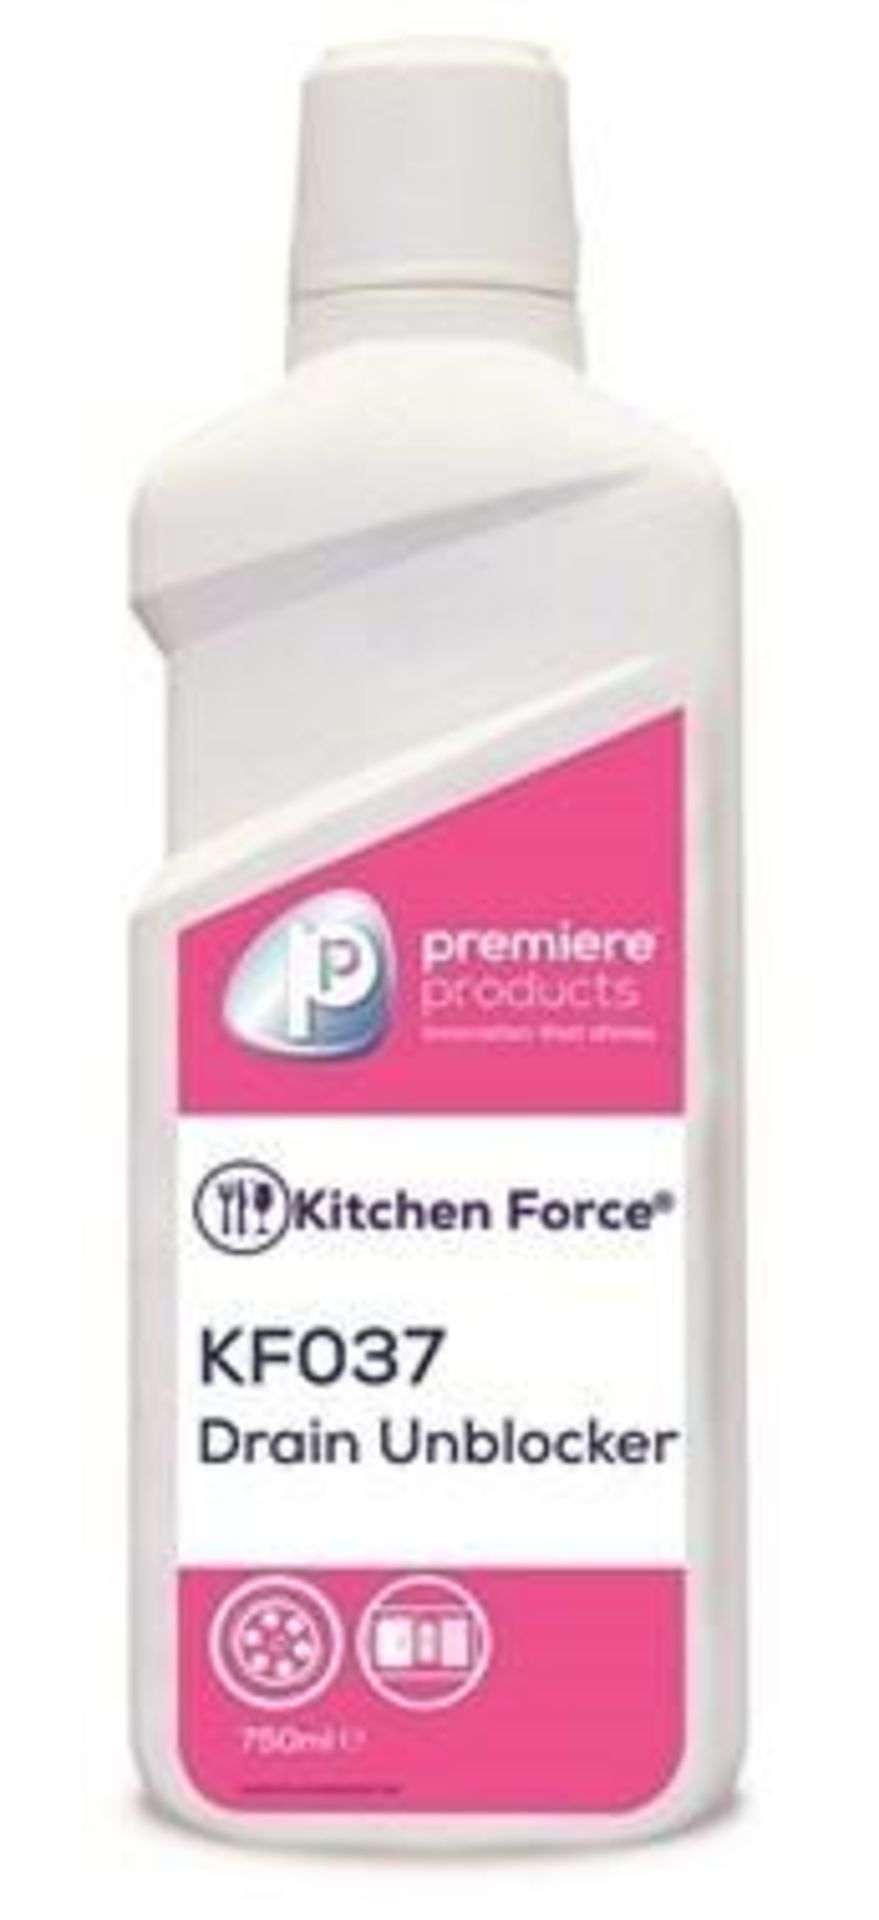 12 x Kitchen Force 750ml Drain Unblocker - Premiere Products - Powerful Alkaline Drain Cleaner -